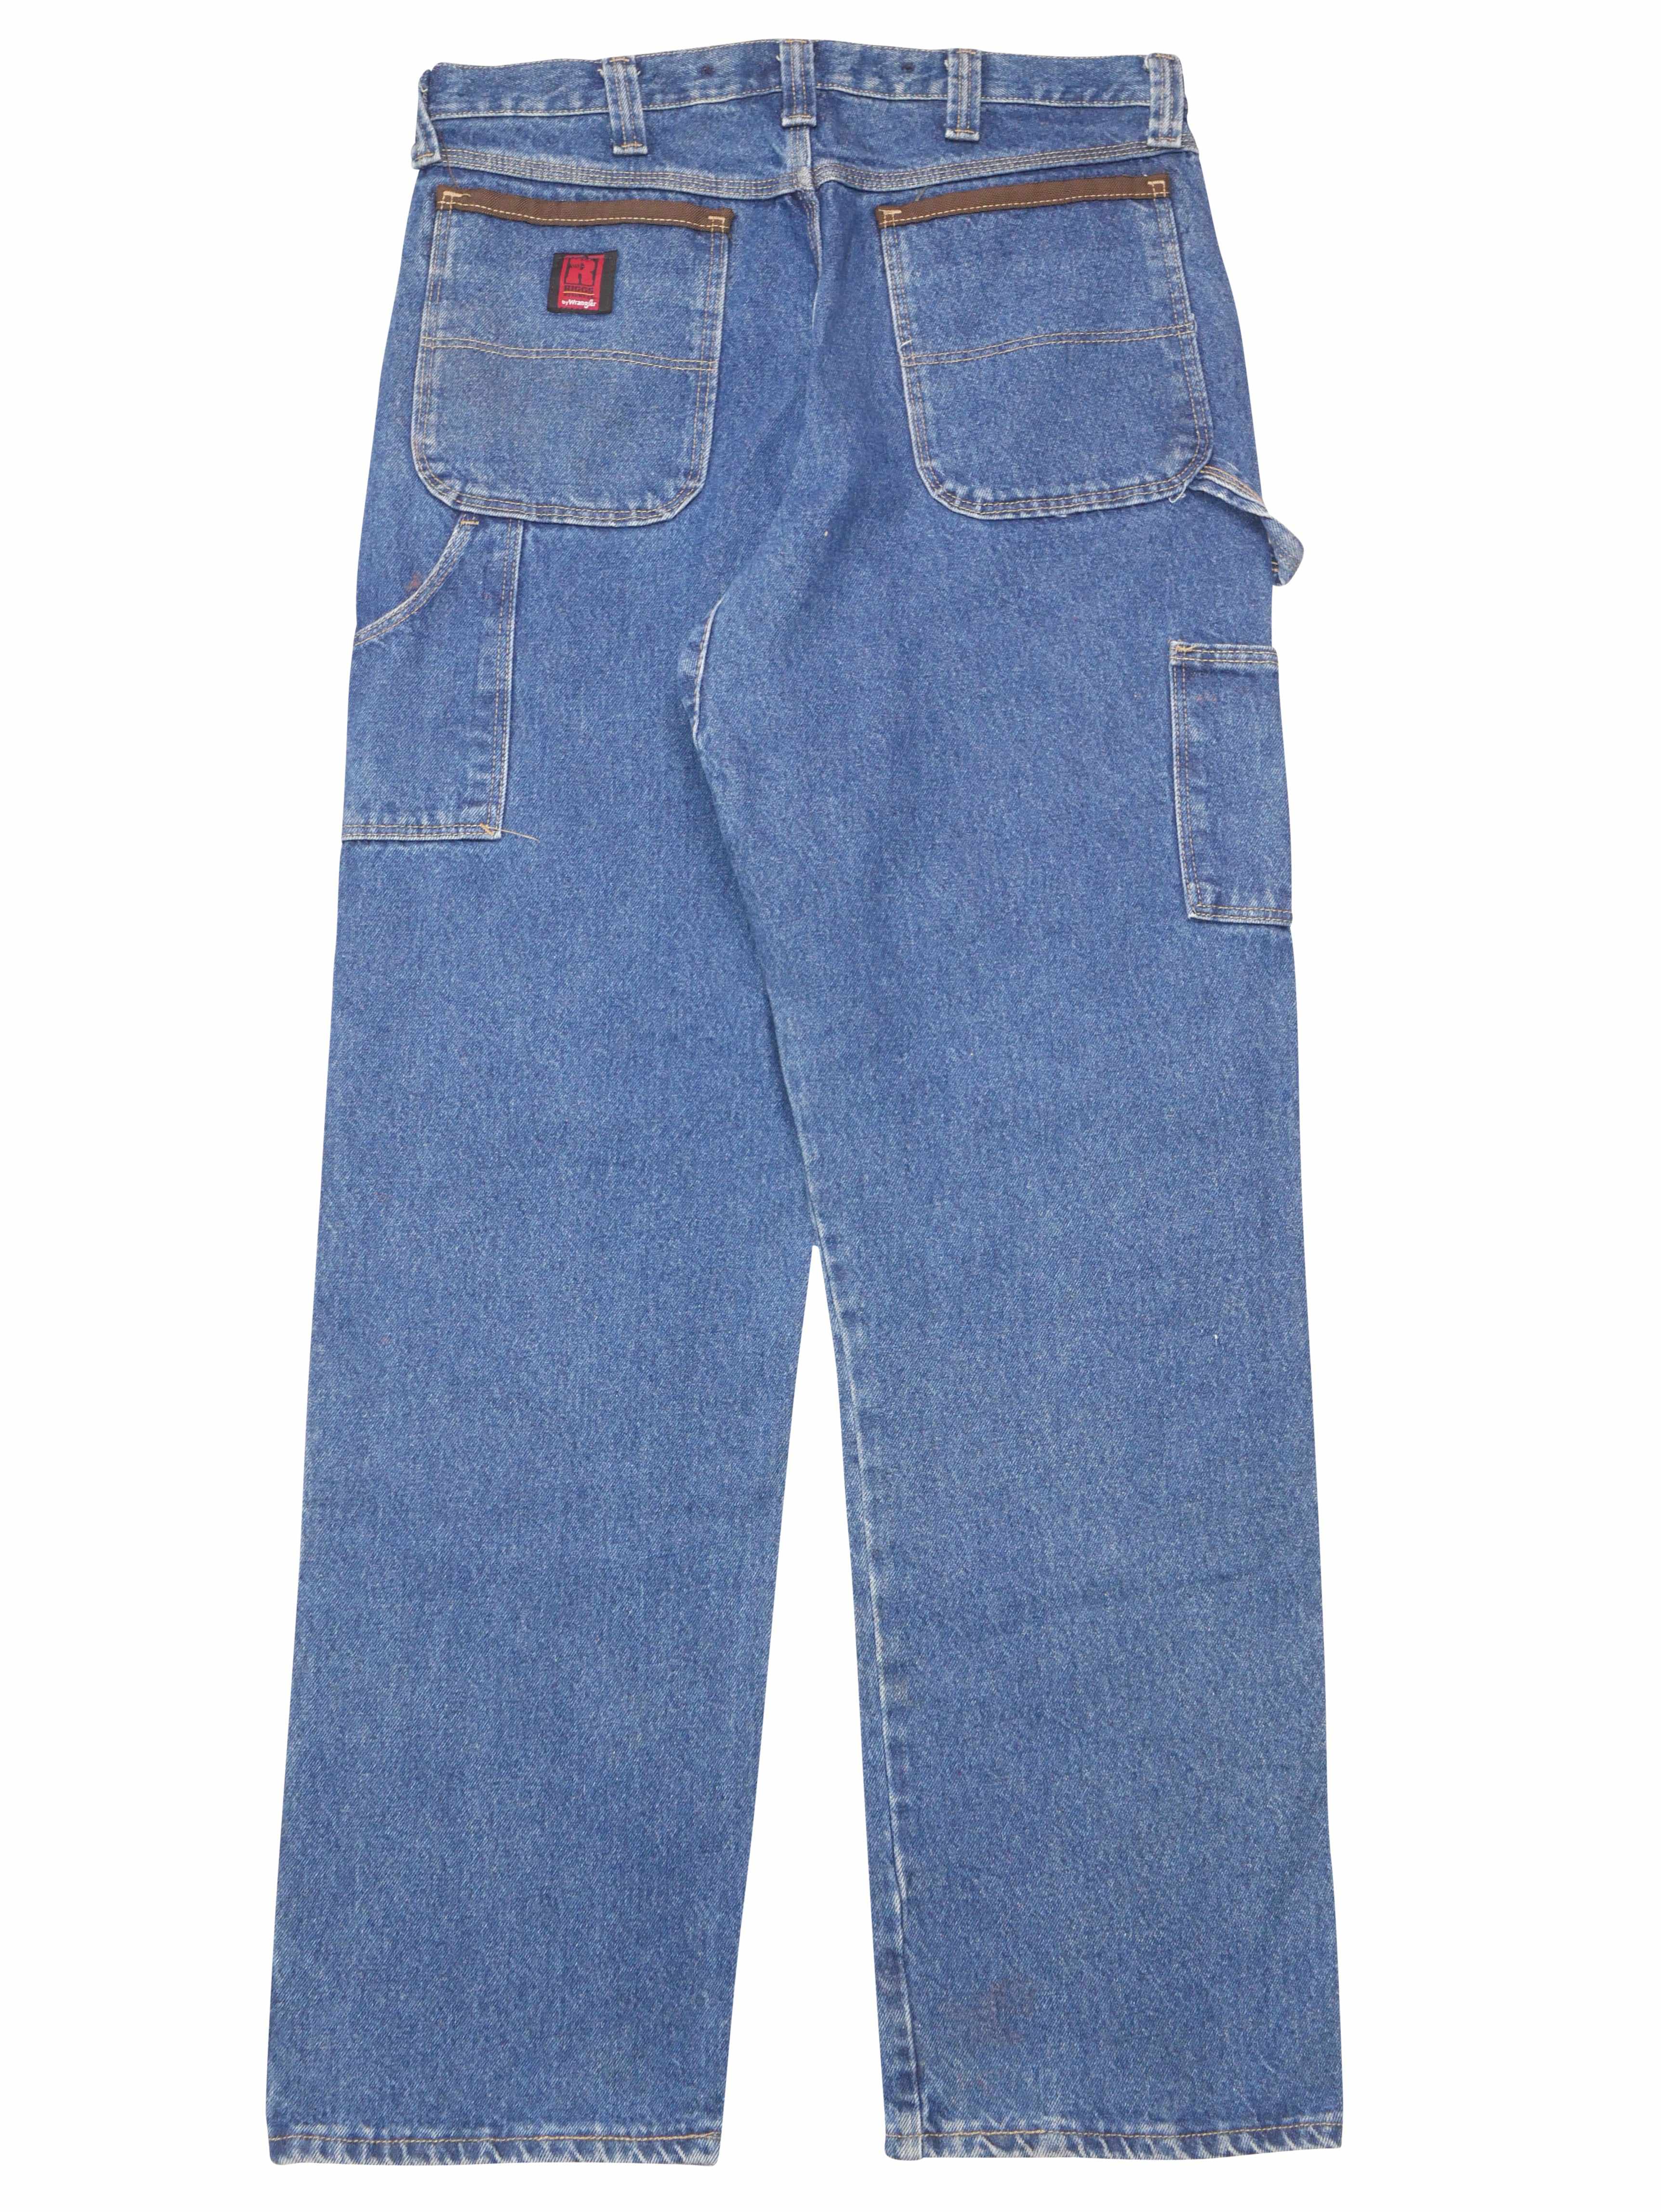 Vintage 90s Wrangler Double Knee Jean (34) – Room On Fire